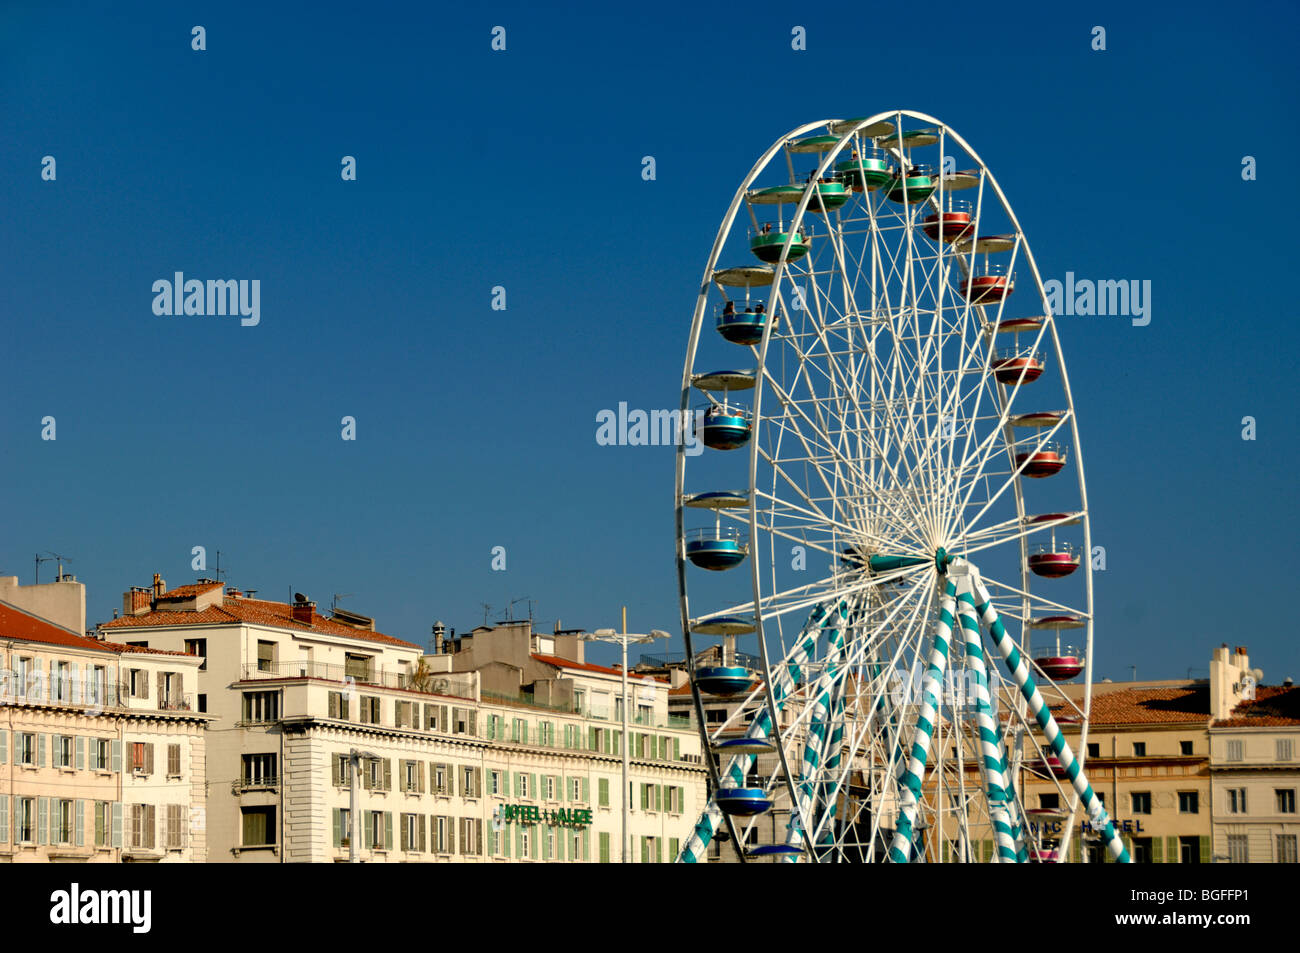 Ferris Wheel or Big Wheel Amusement Ride on Quai des Belges, Old Port, Vieux Port, Harbour or Harbor, Marseille or Marseilles, Provence, France Stock Photo